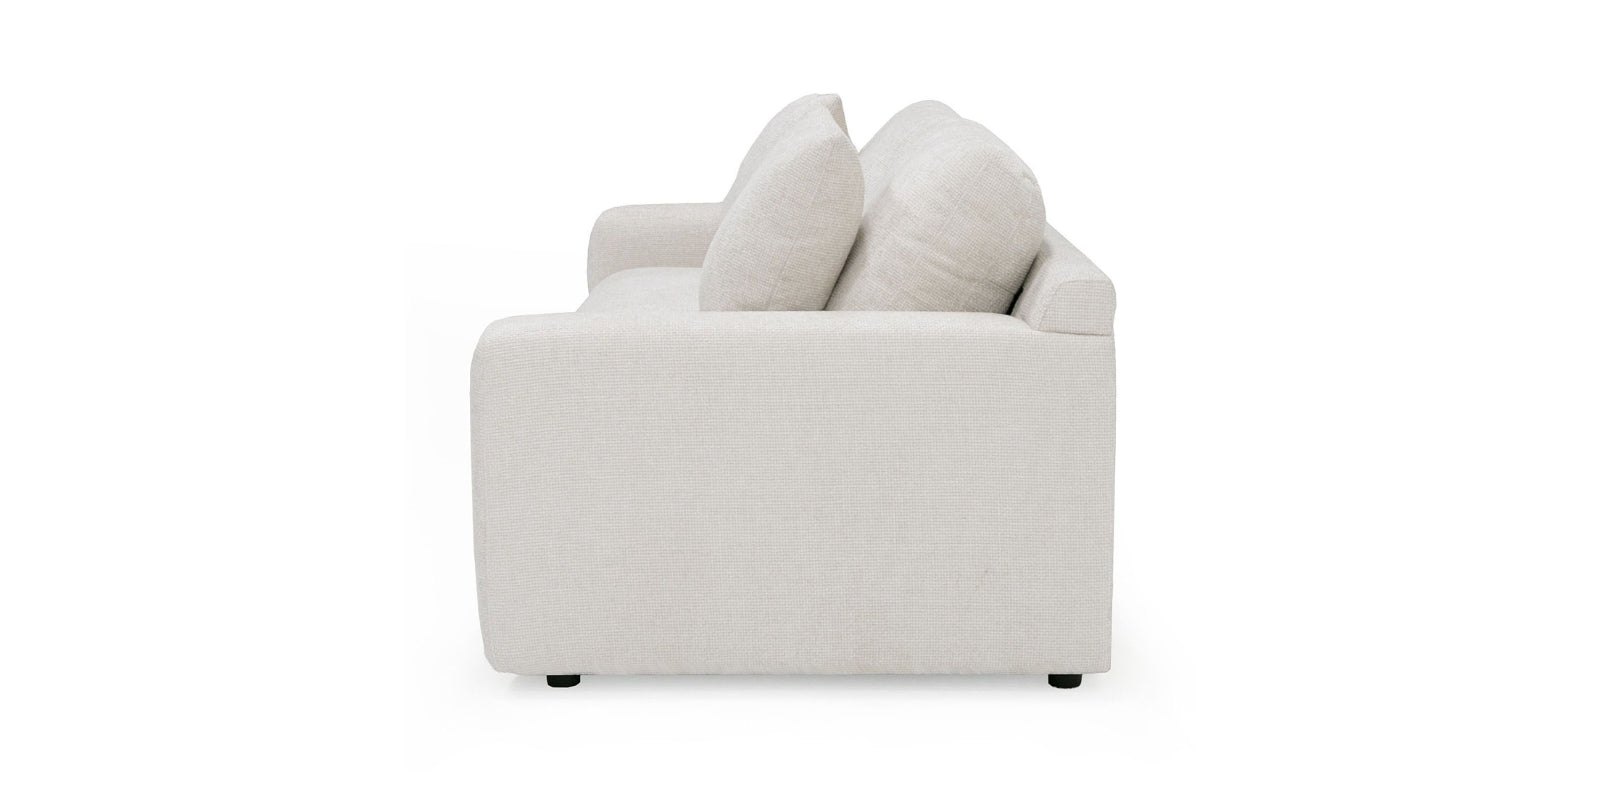 Glory Fabric 3 Seater Sofa in Ivory Cream Colour